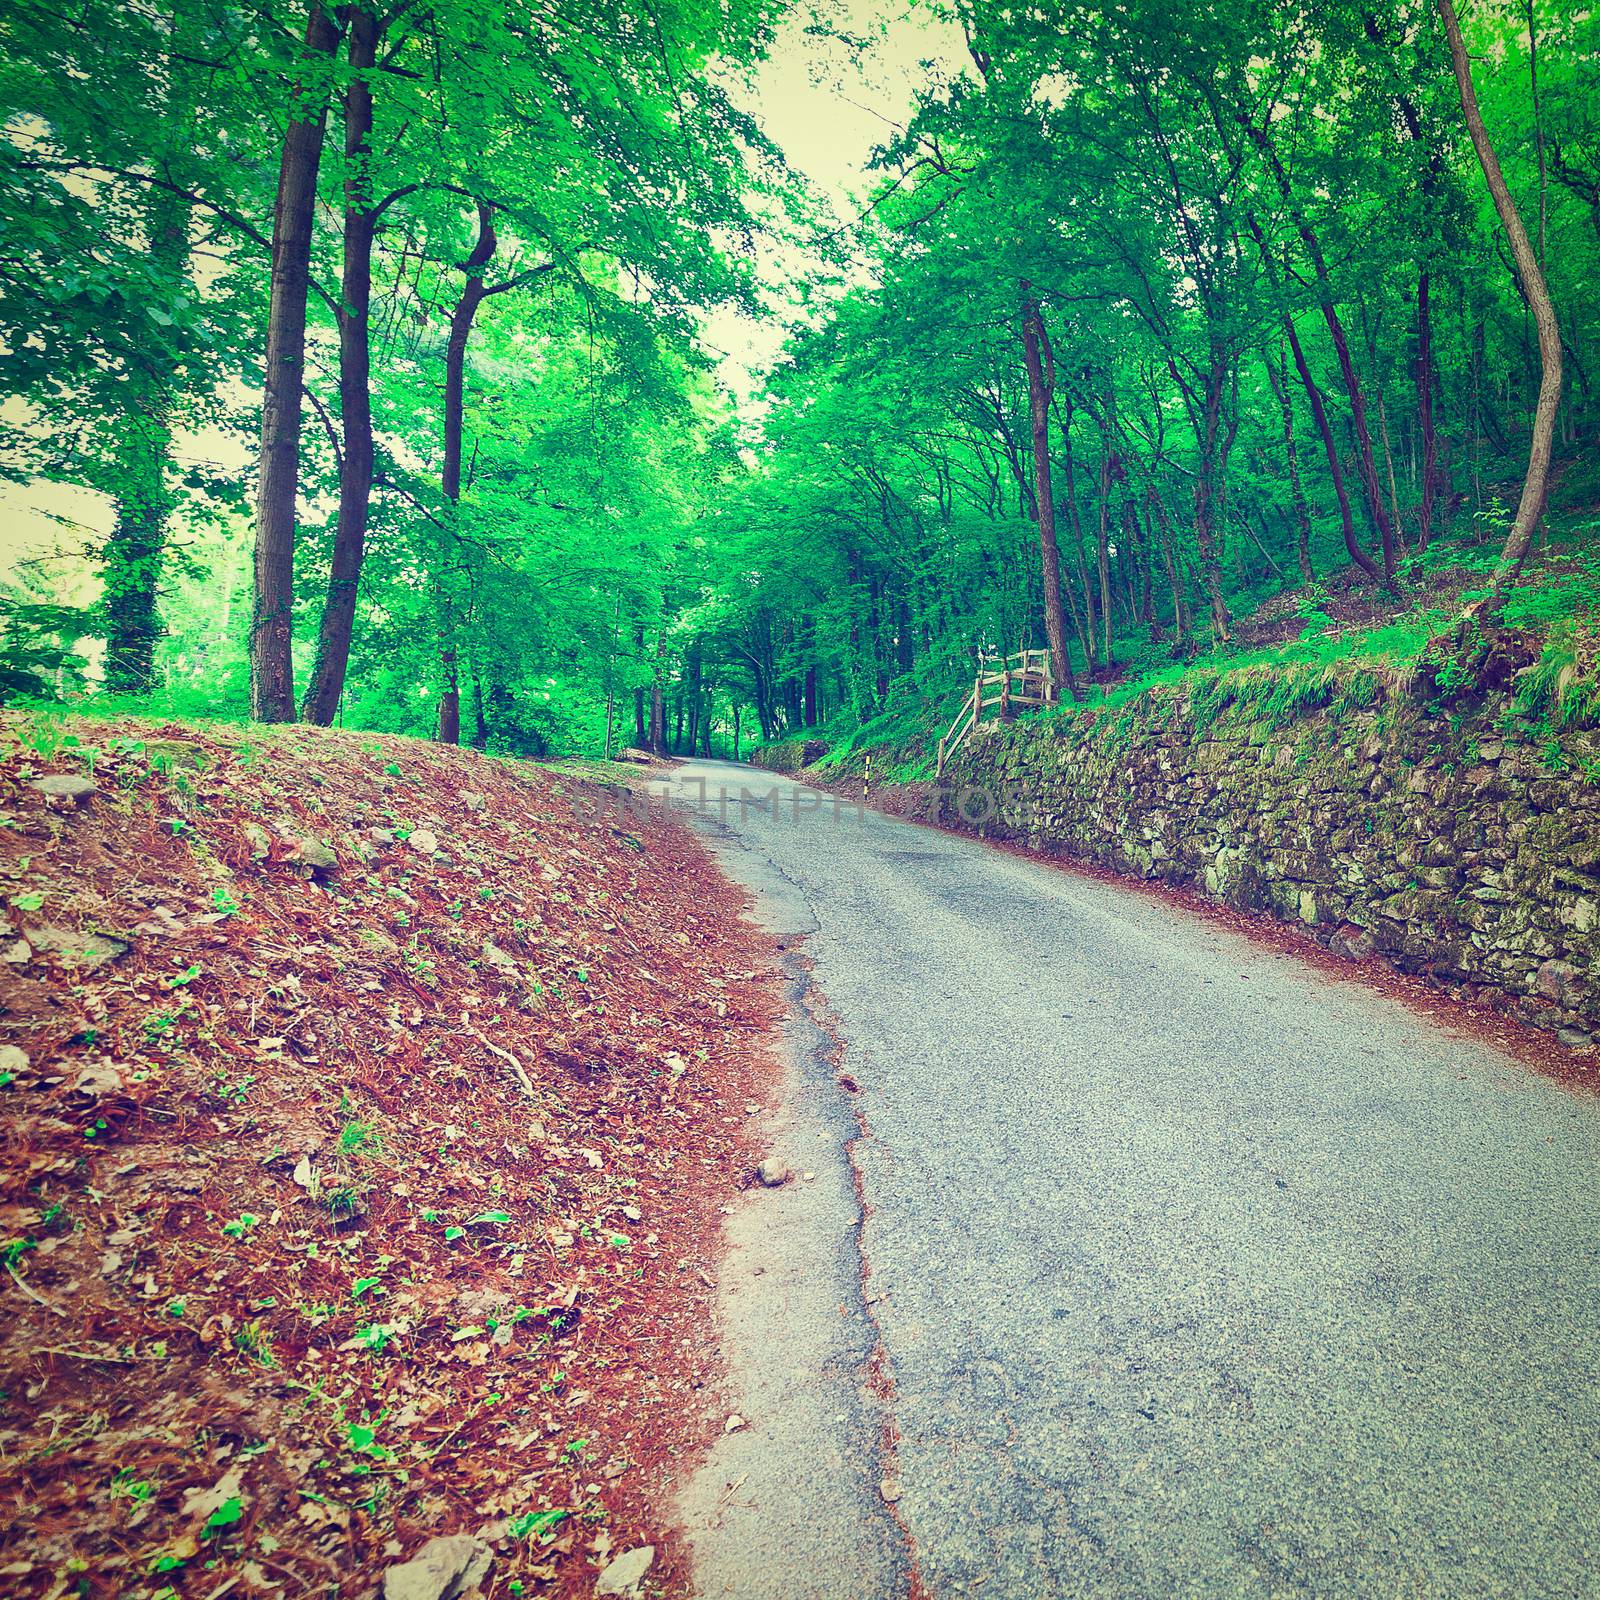 Asphalt Forest Road in Italy, Instagram Effect